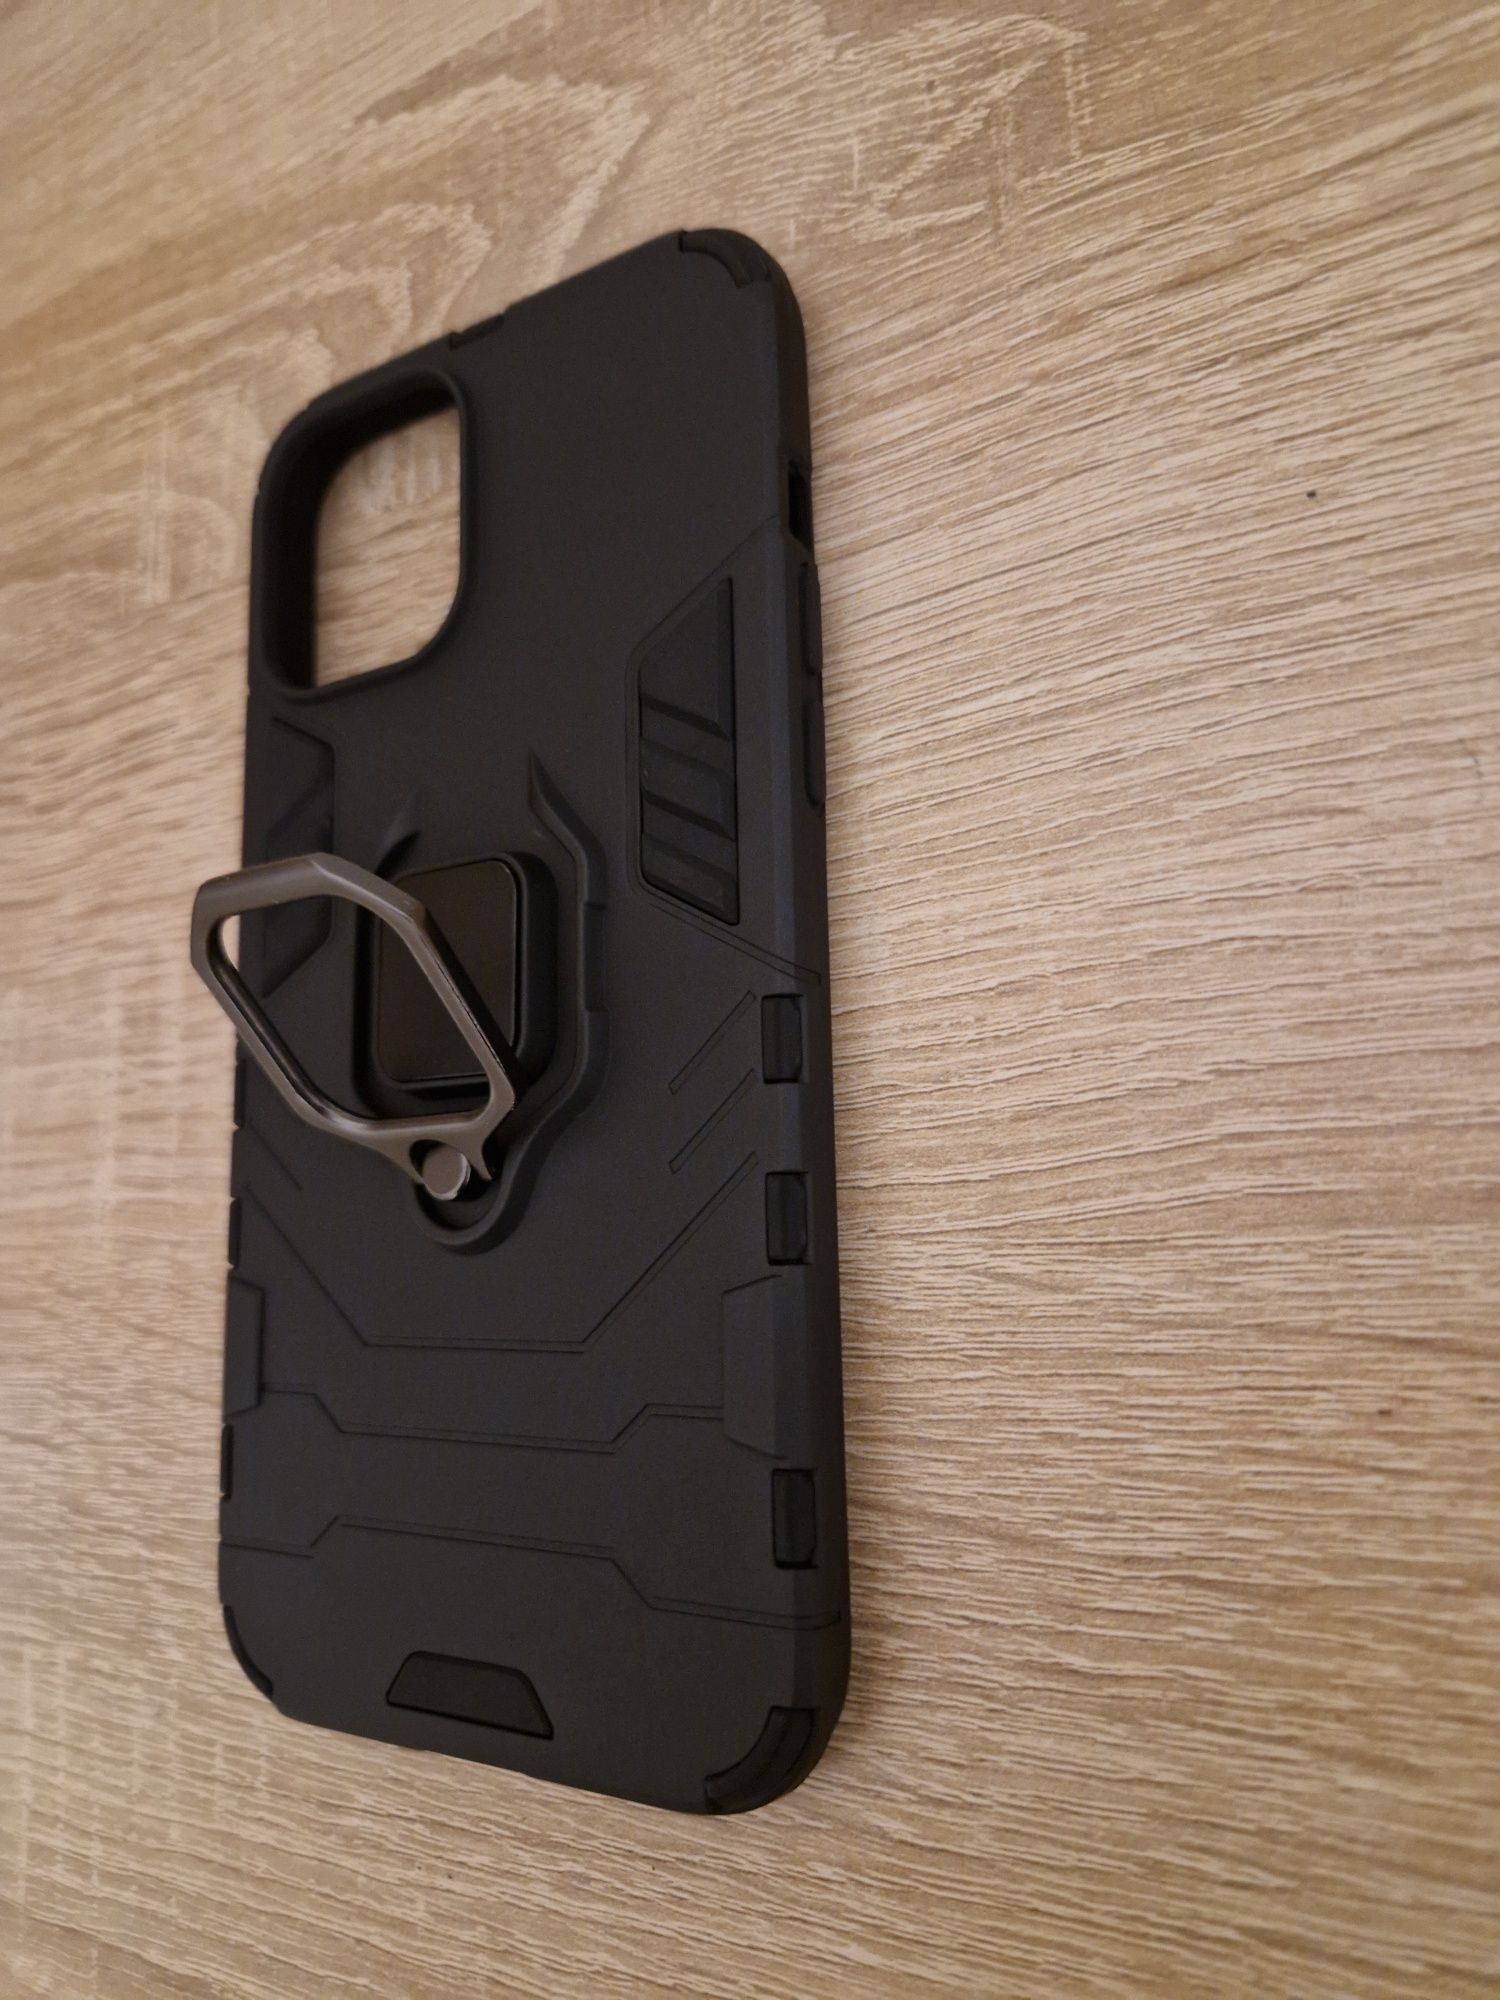 Etui Ring Armor Case do Iphone 12 Pro Max Czarny